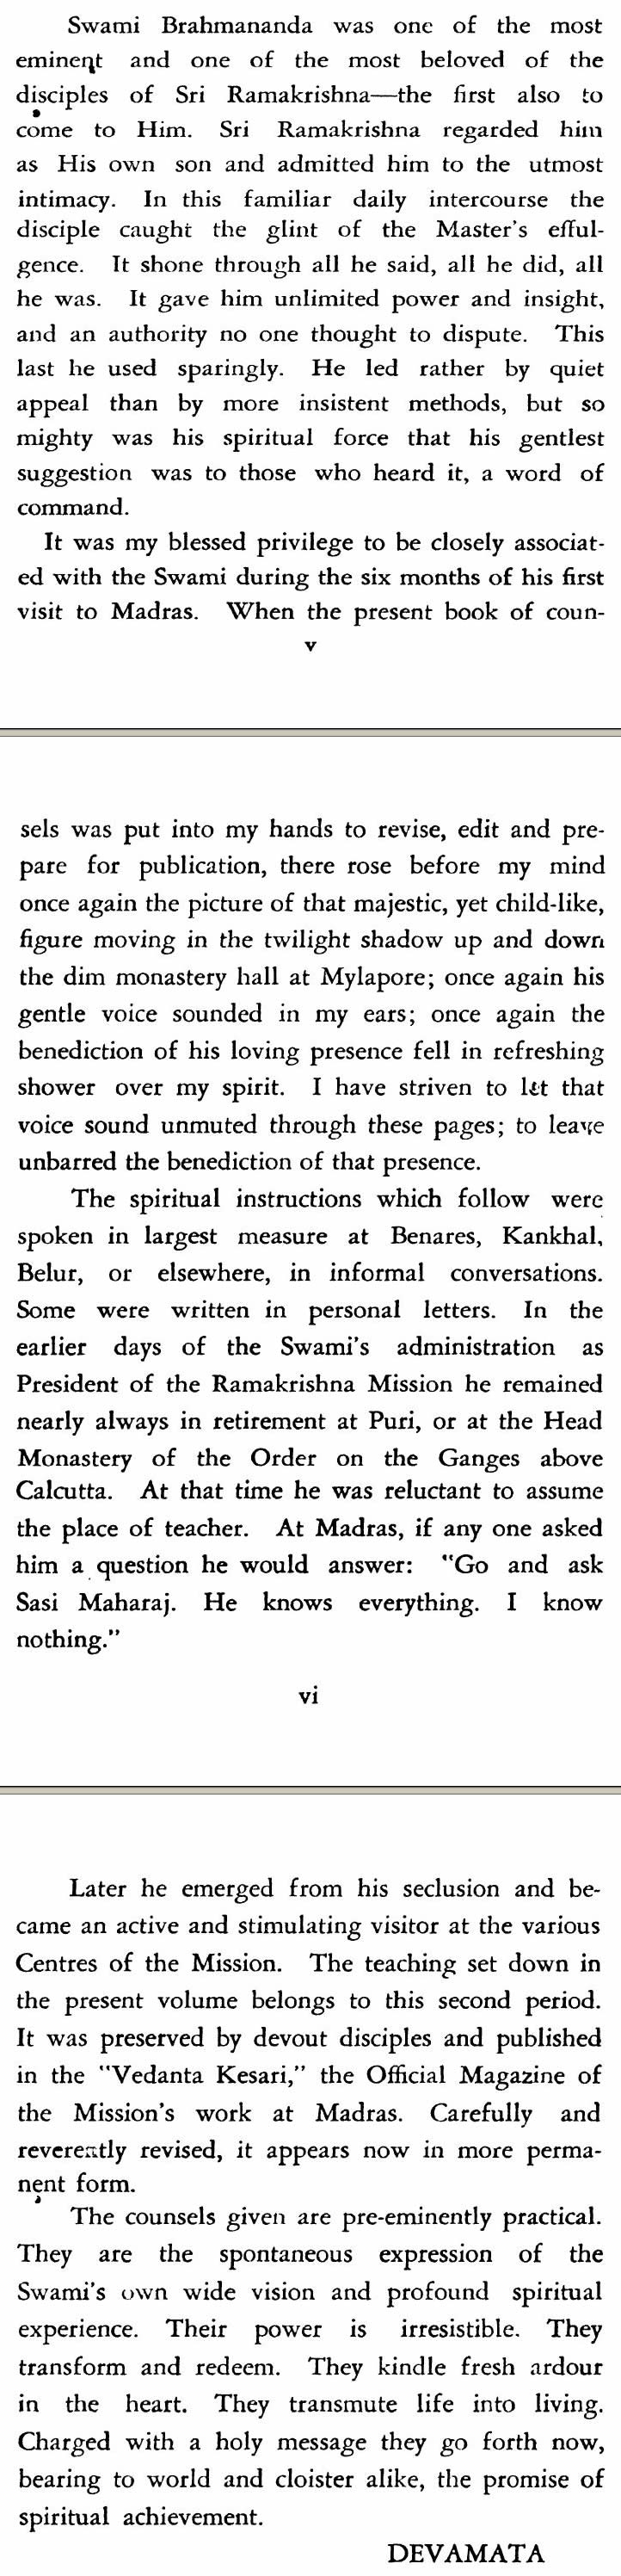 Swami Brahmananda Reminisceneces by Sister Devamata